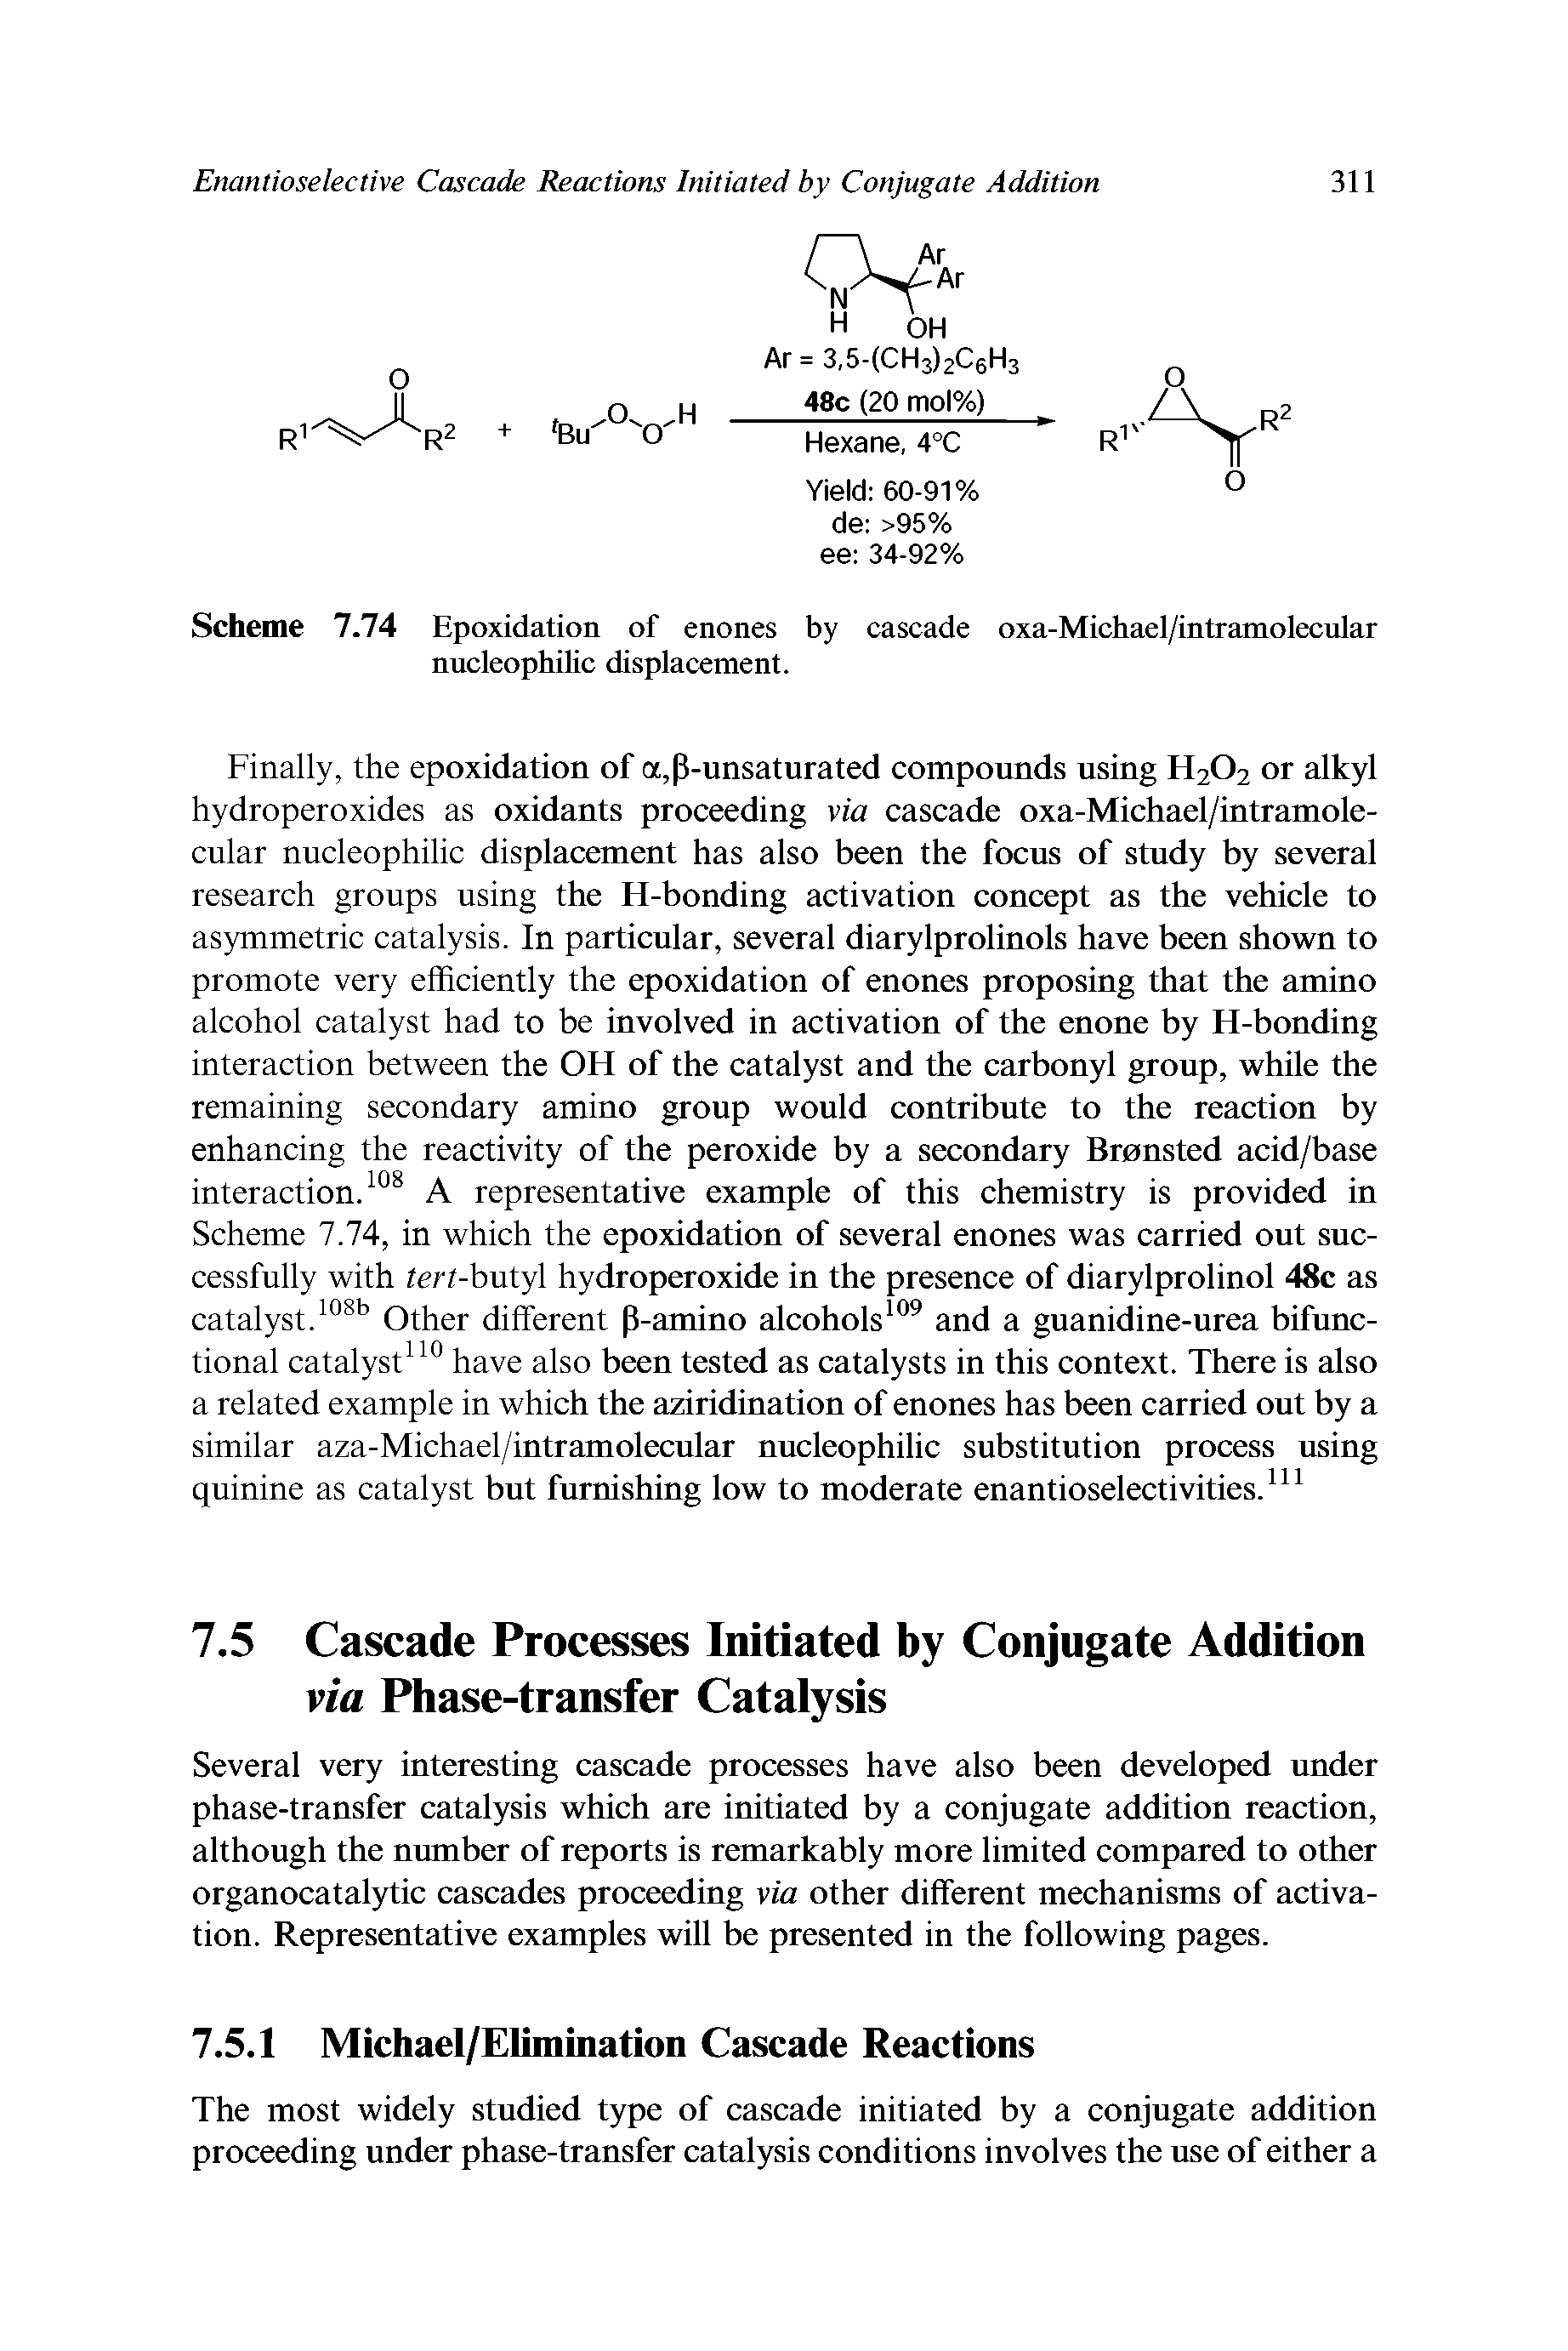 Scheme 7.74 Epoxidation of enones by cascade oxa-Michael/intramolecular nucleophilic displacement.